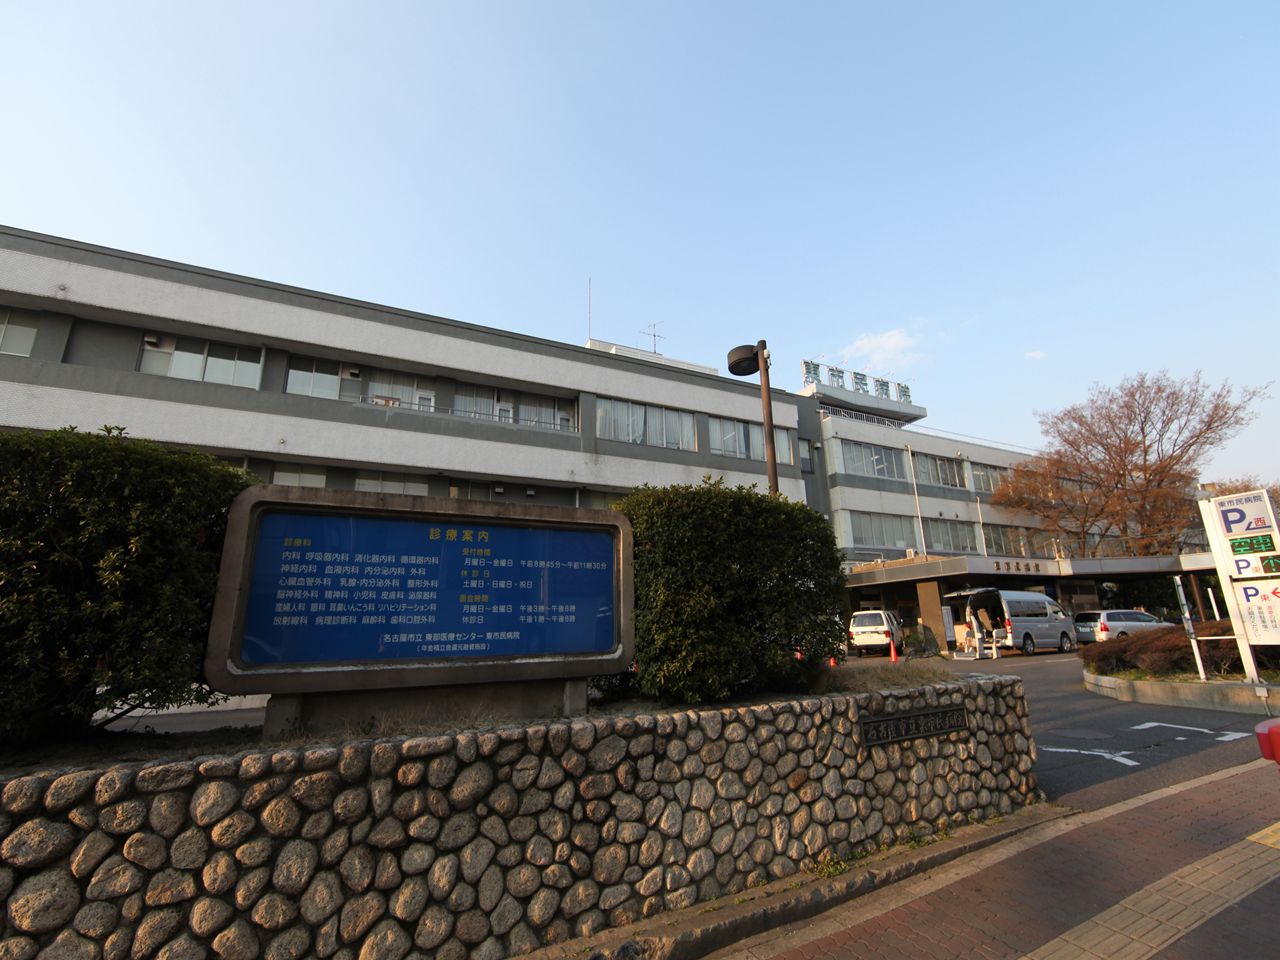 Hospital. 1100m to Nagoya Municipal Eastern Medical Center (hospital)